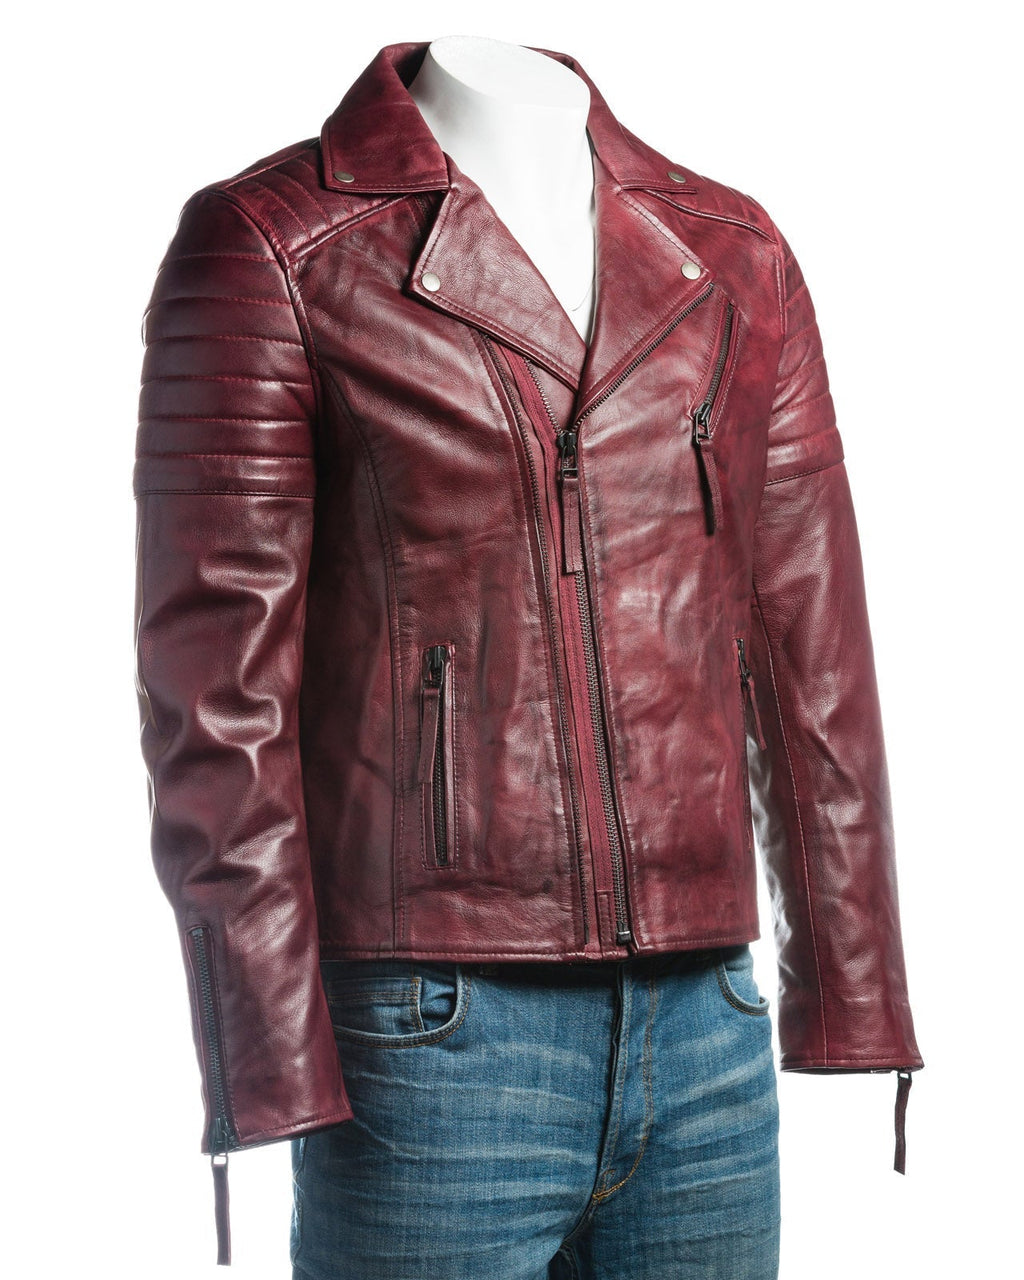 Men's Tan Vintage Look Biker Style Leather Jacket: Placido